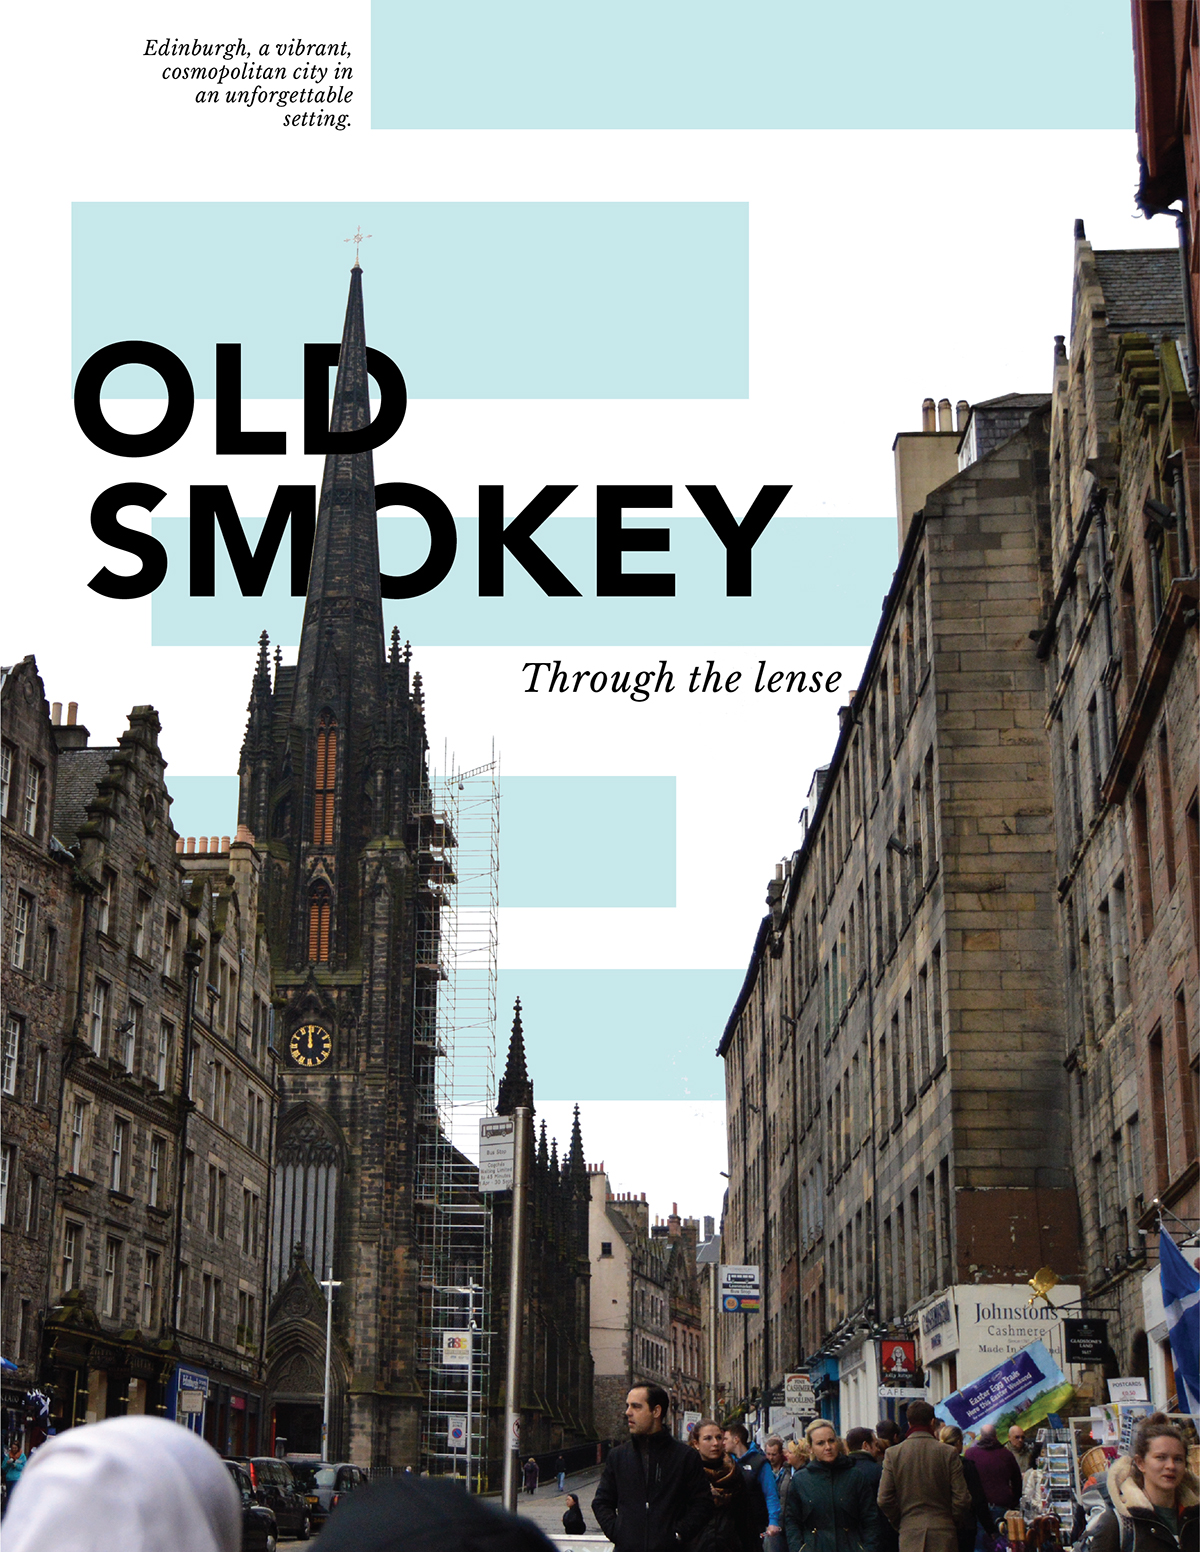 edinburgh scotland Old Smokey print editorial